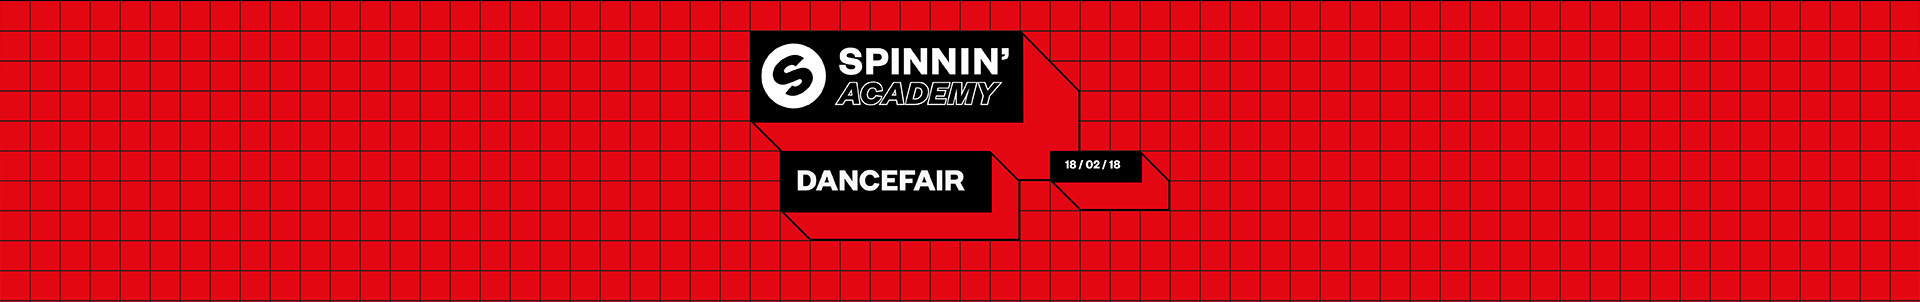 Join Spinnin' at Dancefair